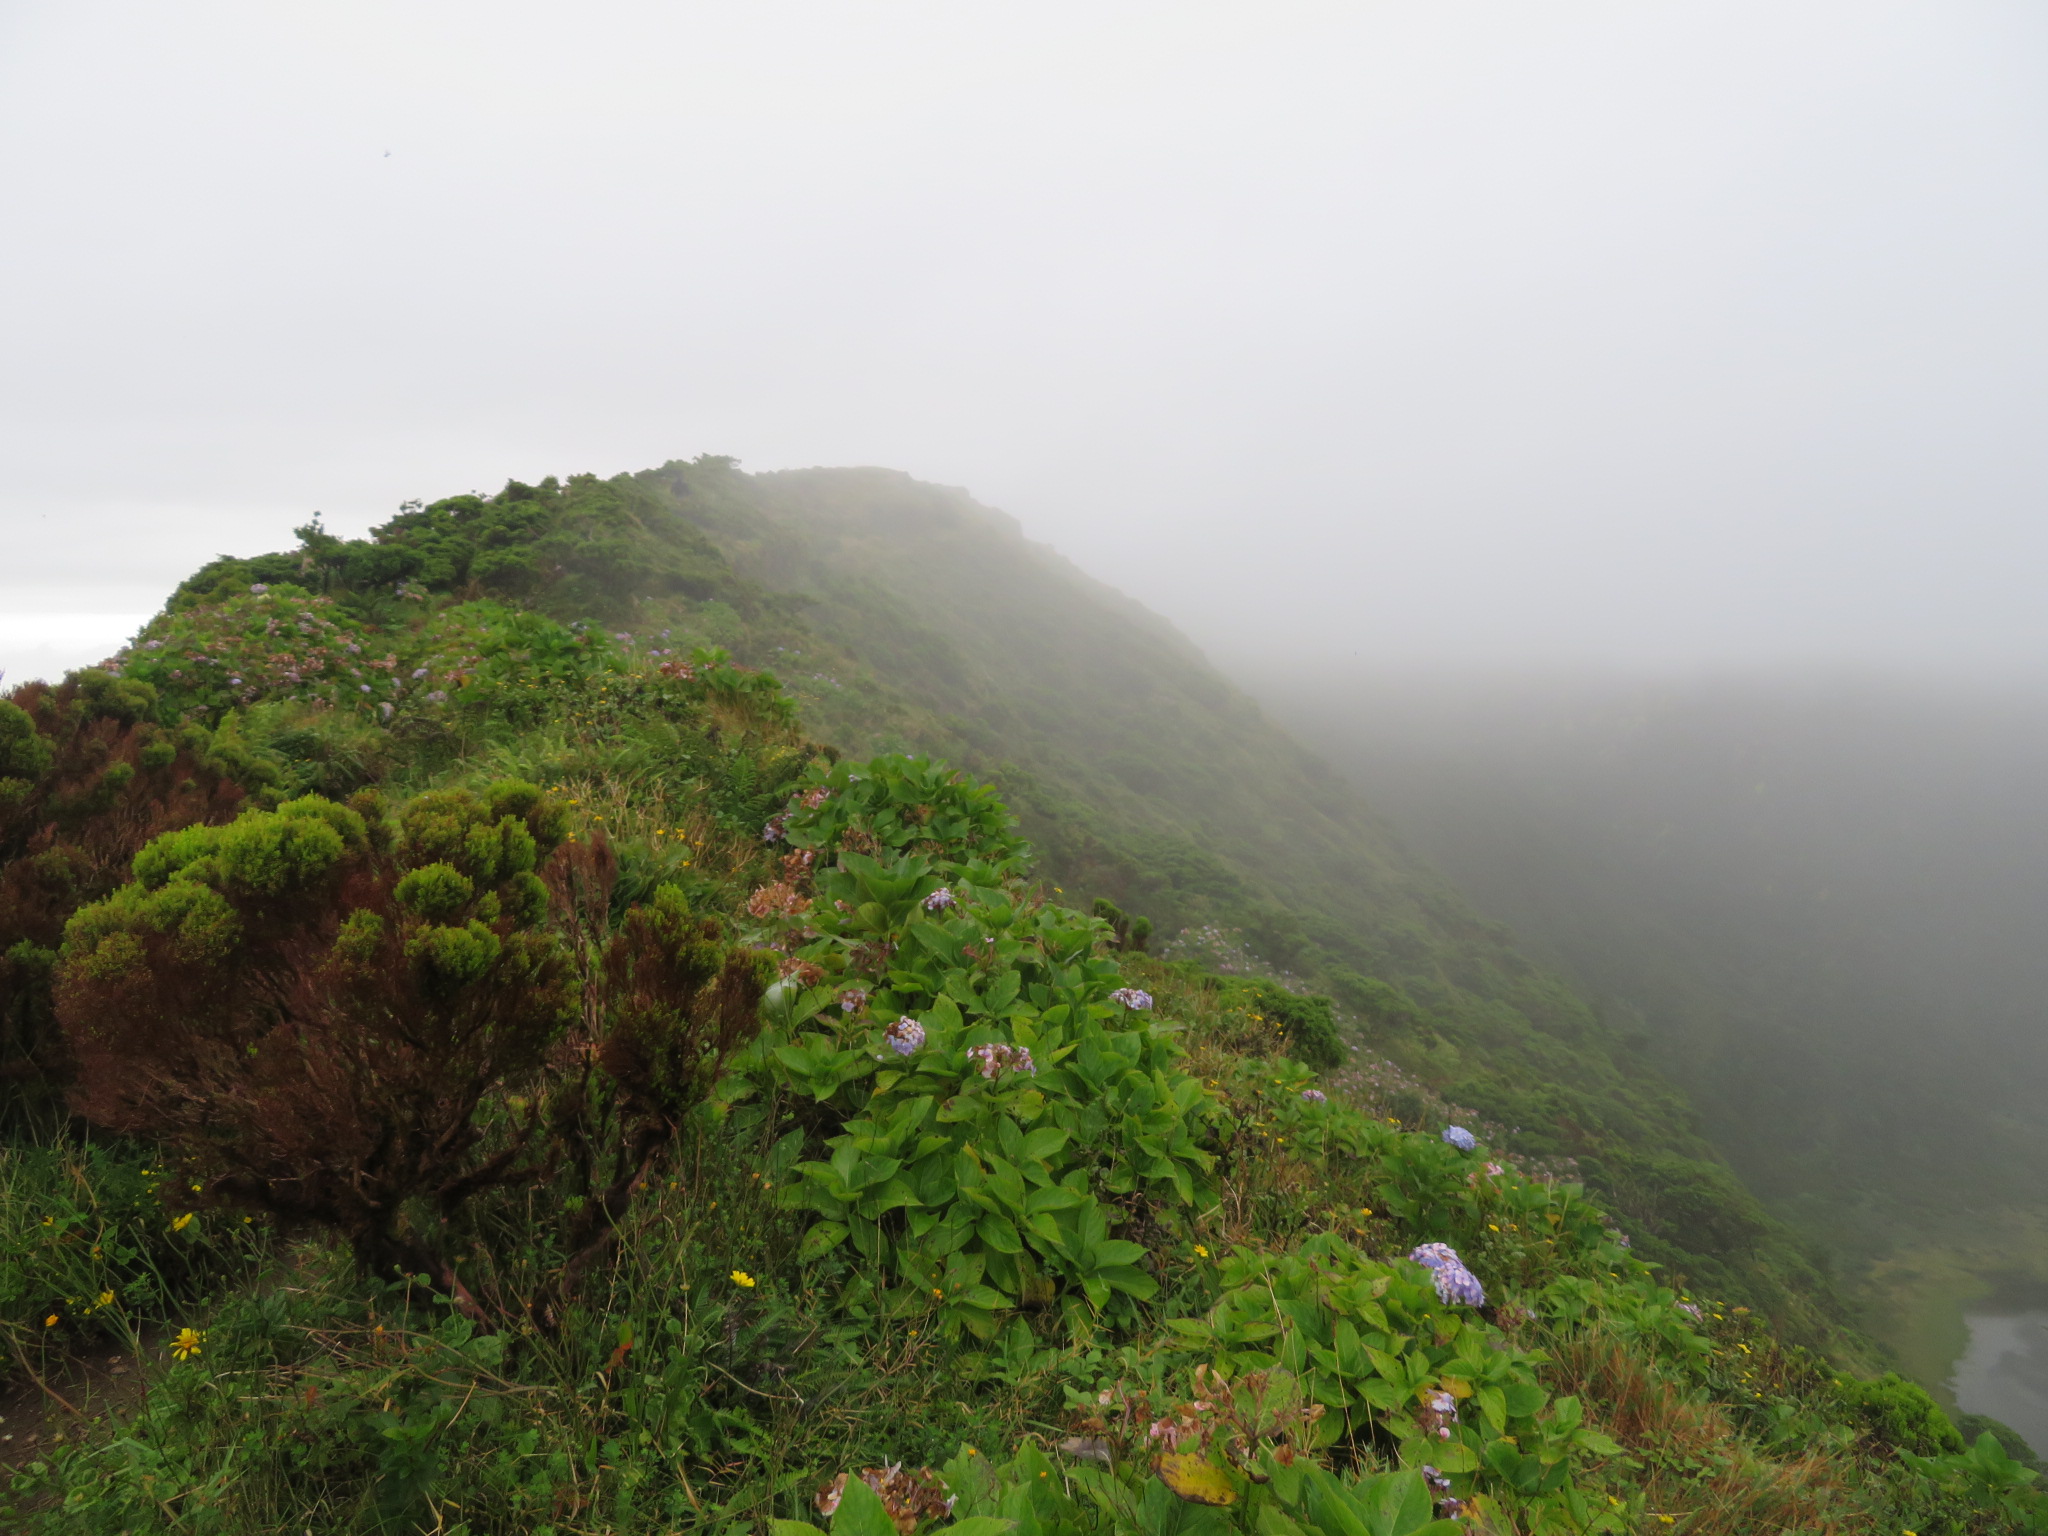 Portugal Azores, Ten Volcanoes Trail, Faial, Vegetation on caldera rim, Walkopedia